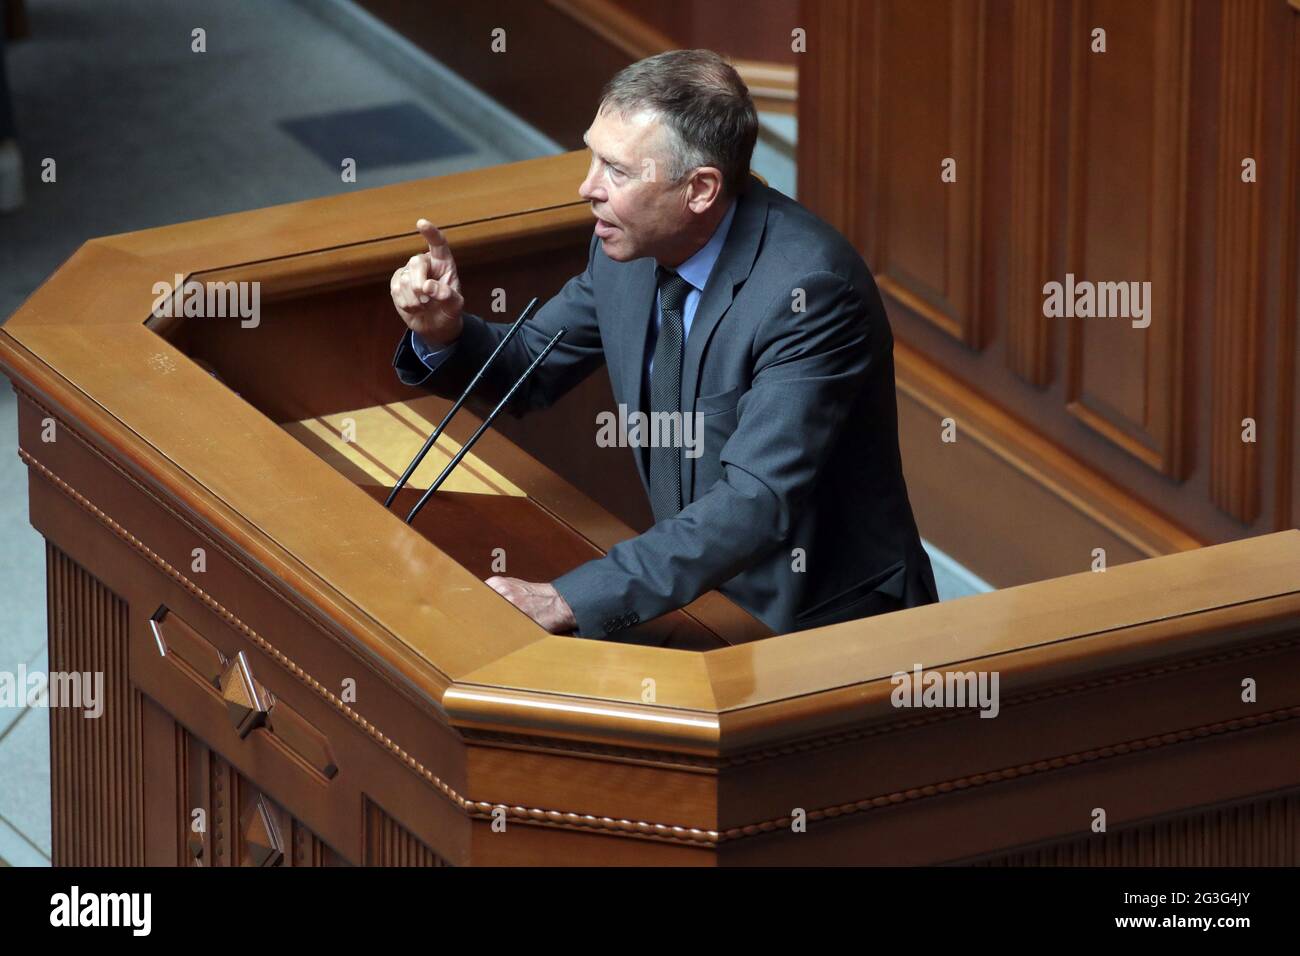 KYIV, UKRAINE - JUNE 16, 2021 - MP Serhii Sobolev speaks from the rostrum during the sitting of the Verkhovna Rada of Ukraine, Kyiv, capital of Ukrain Stock Photo